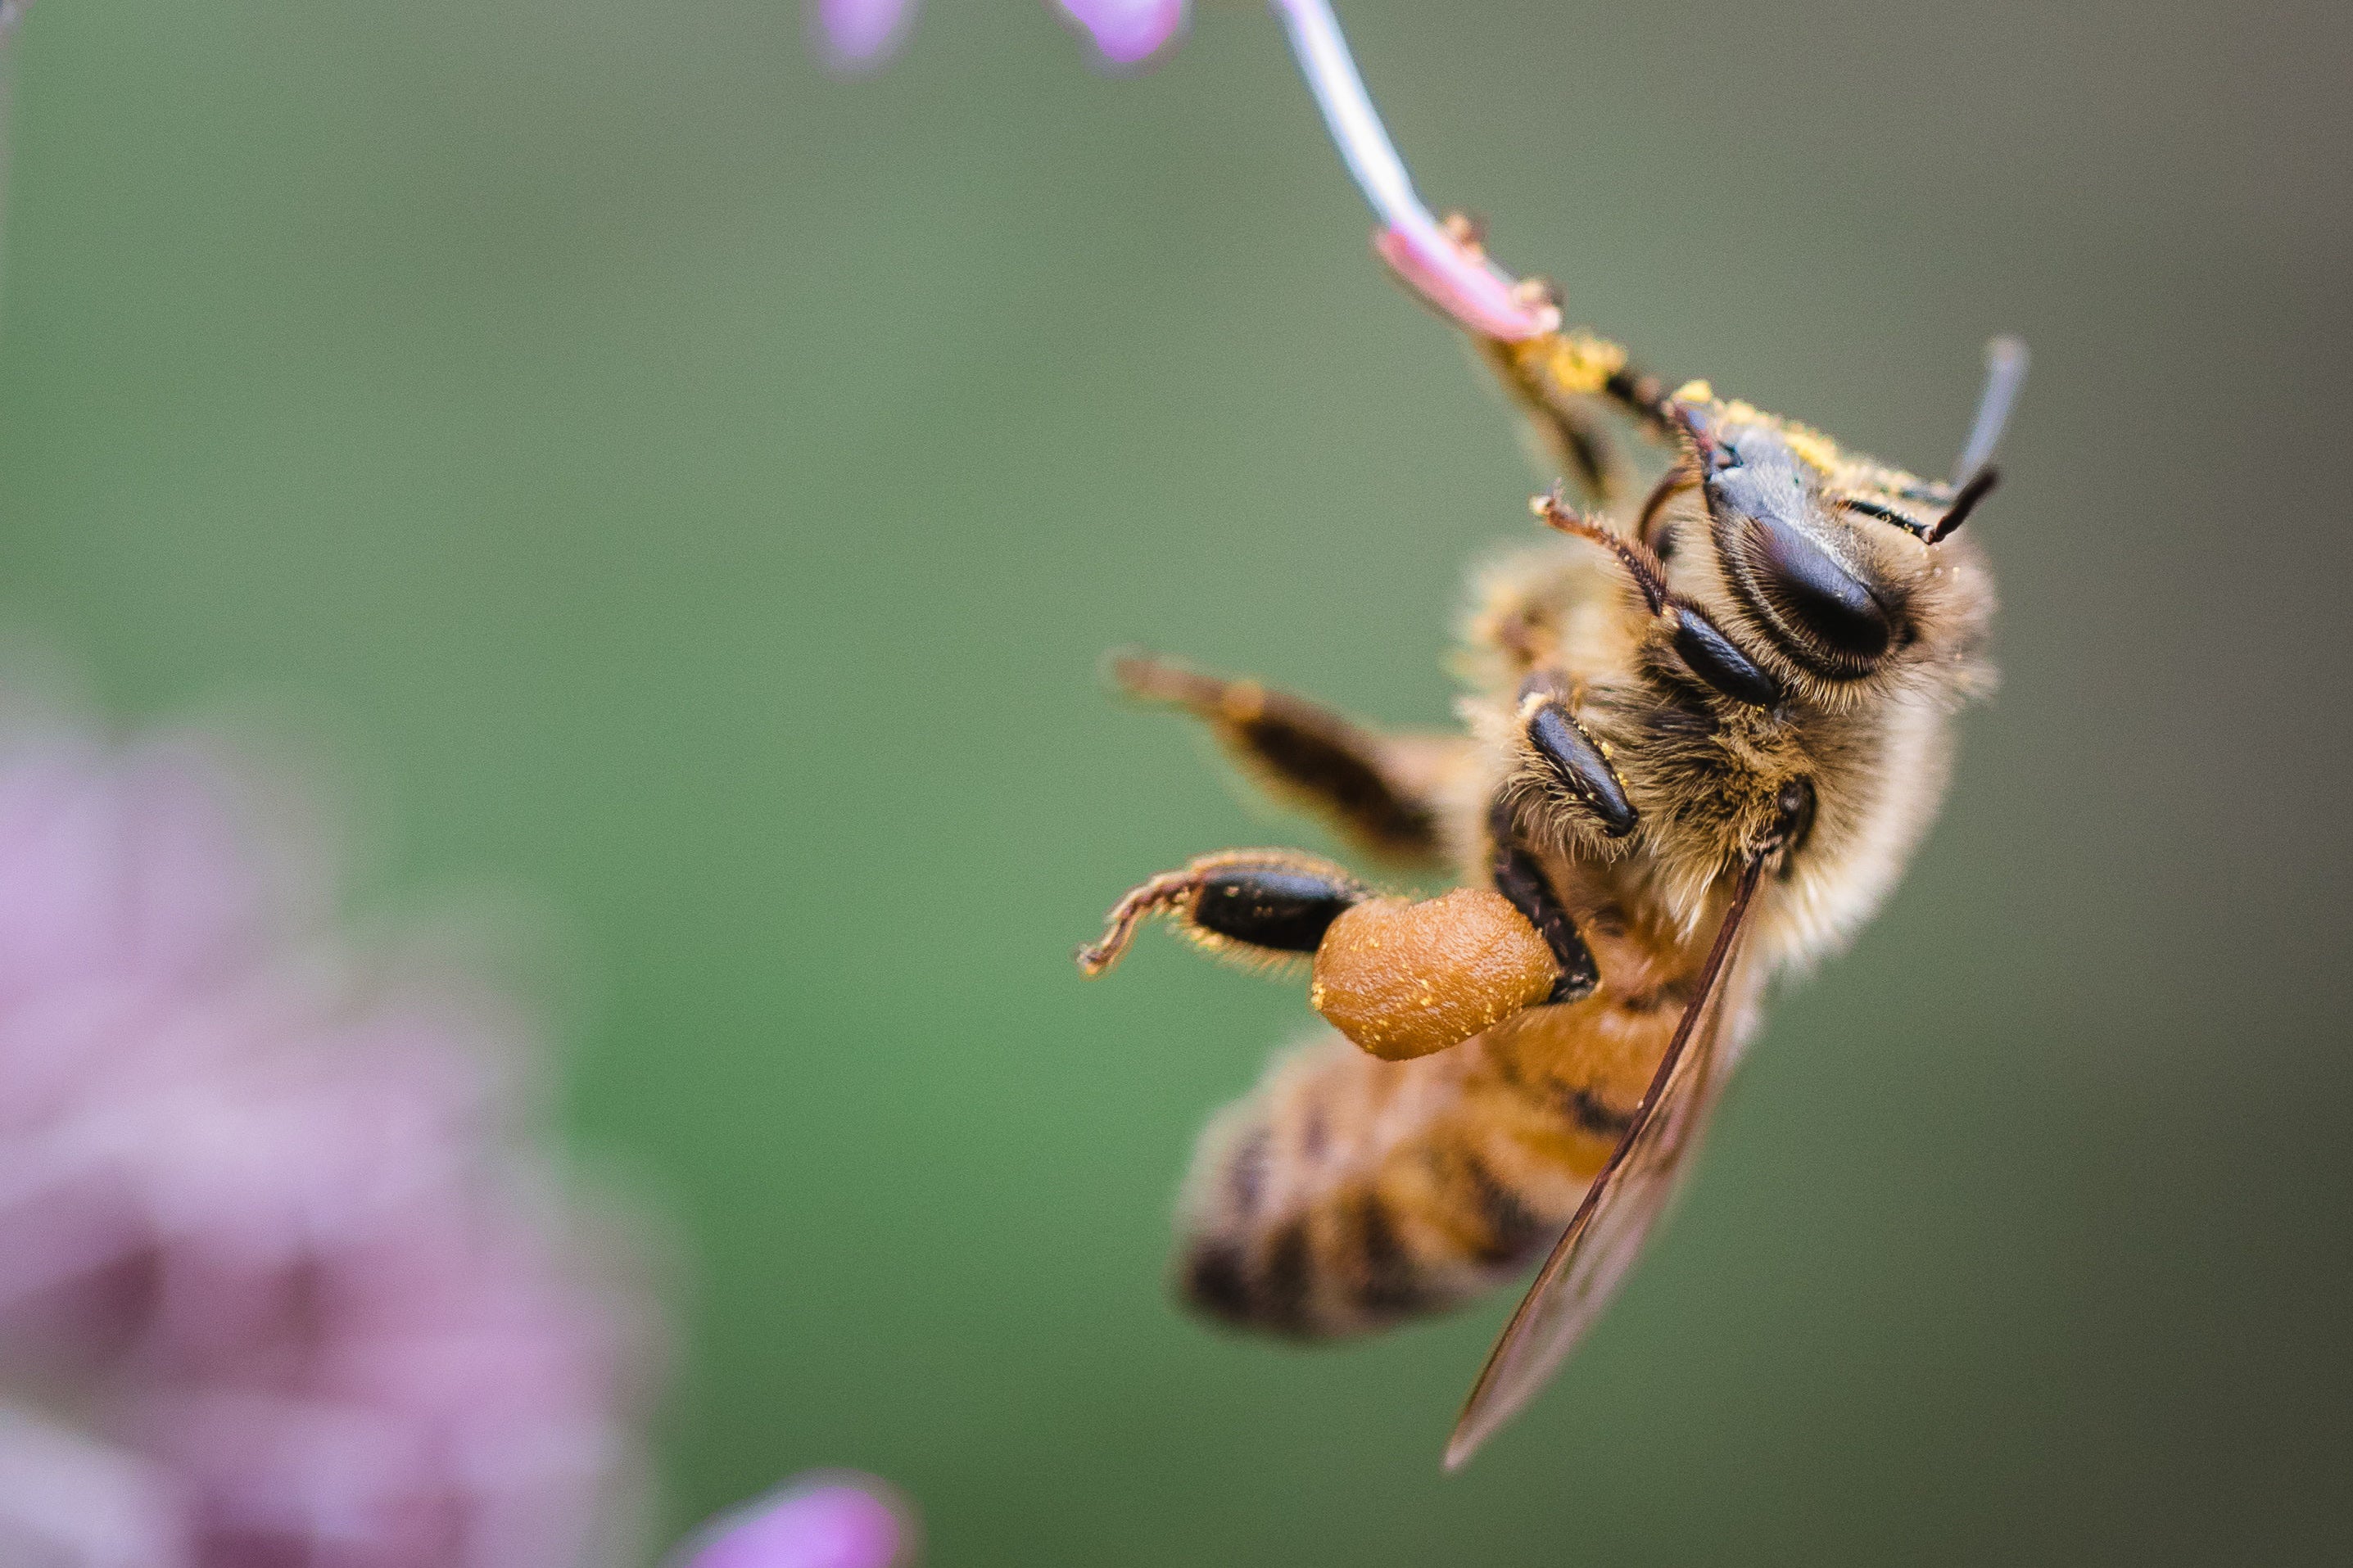 honeybee drinking from a flower bud on green background